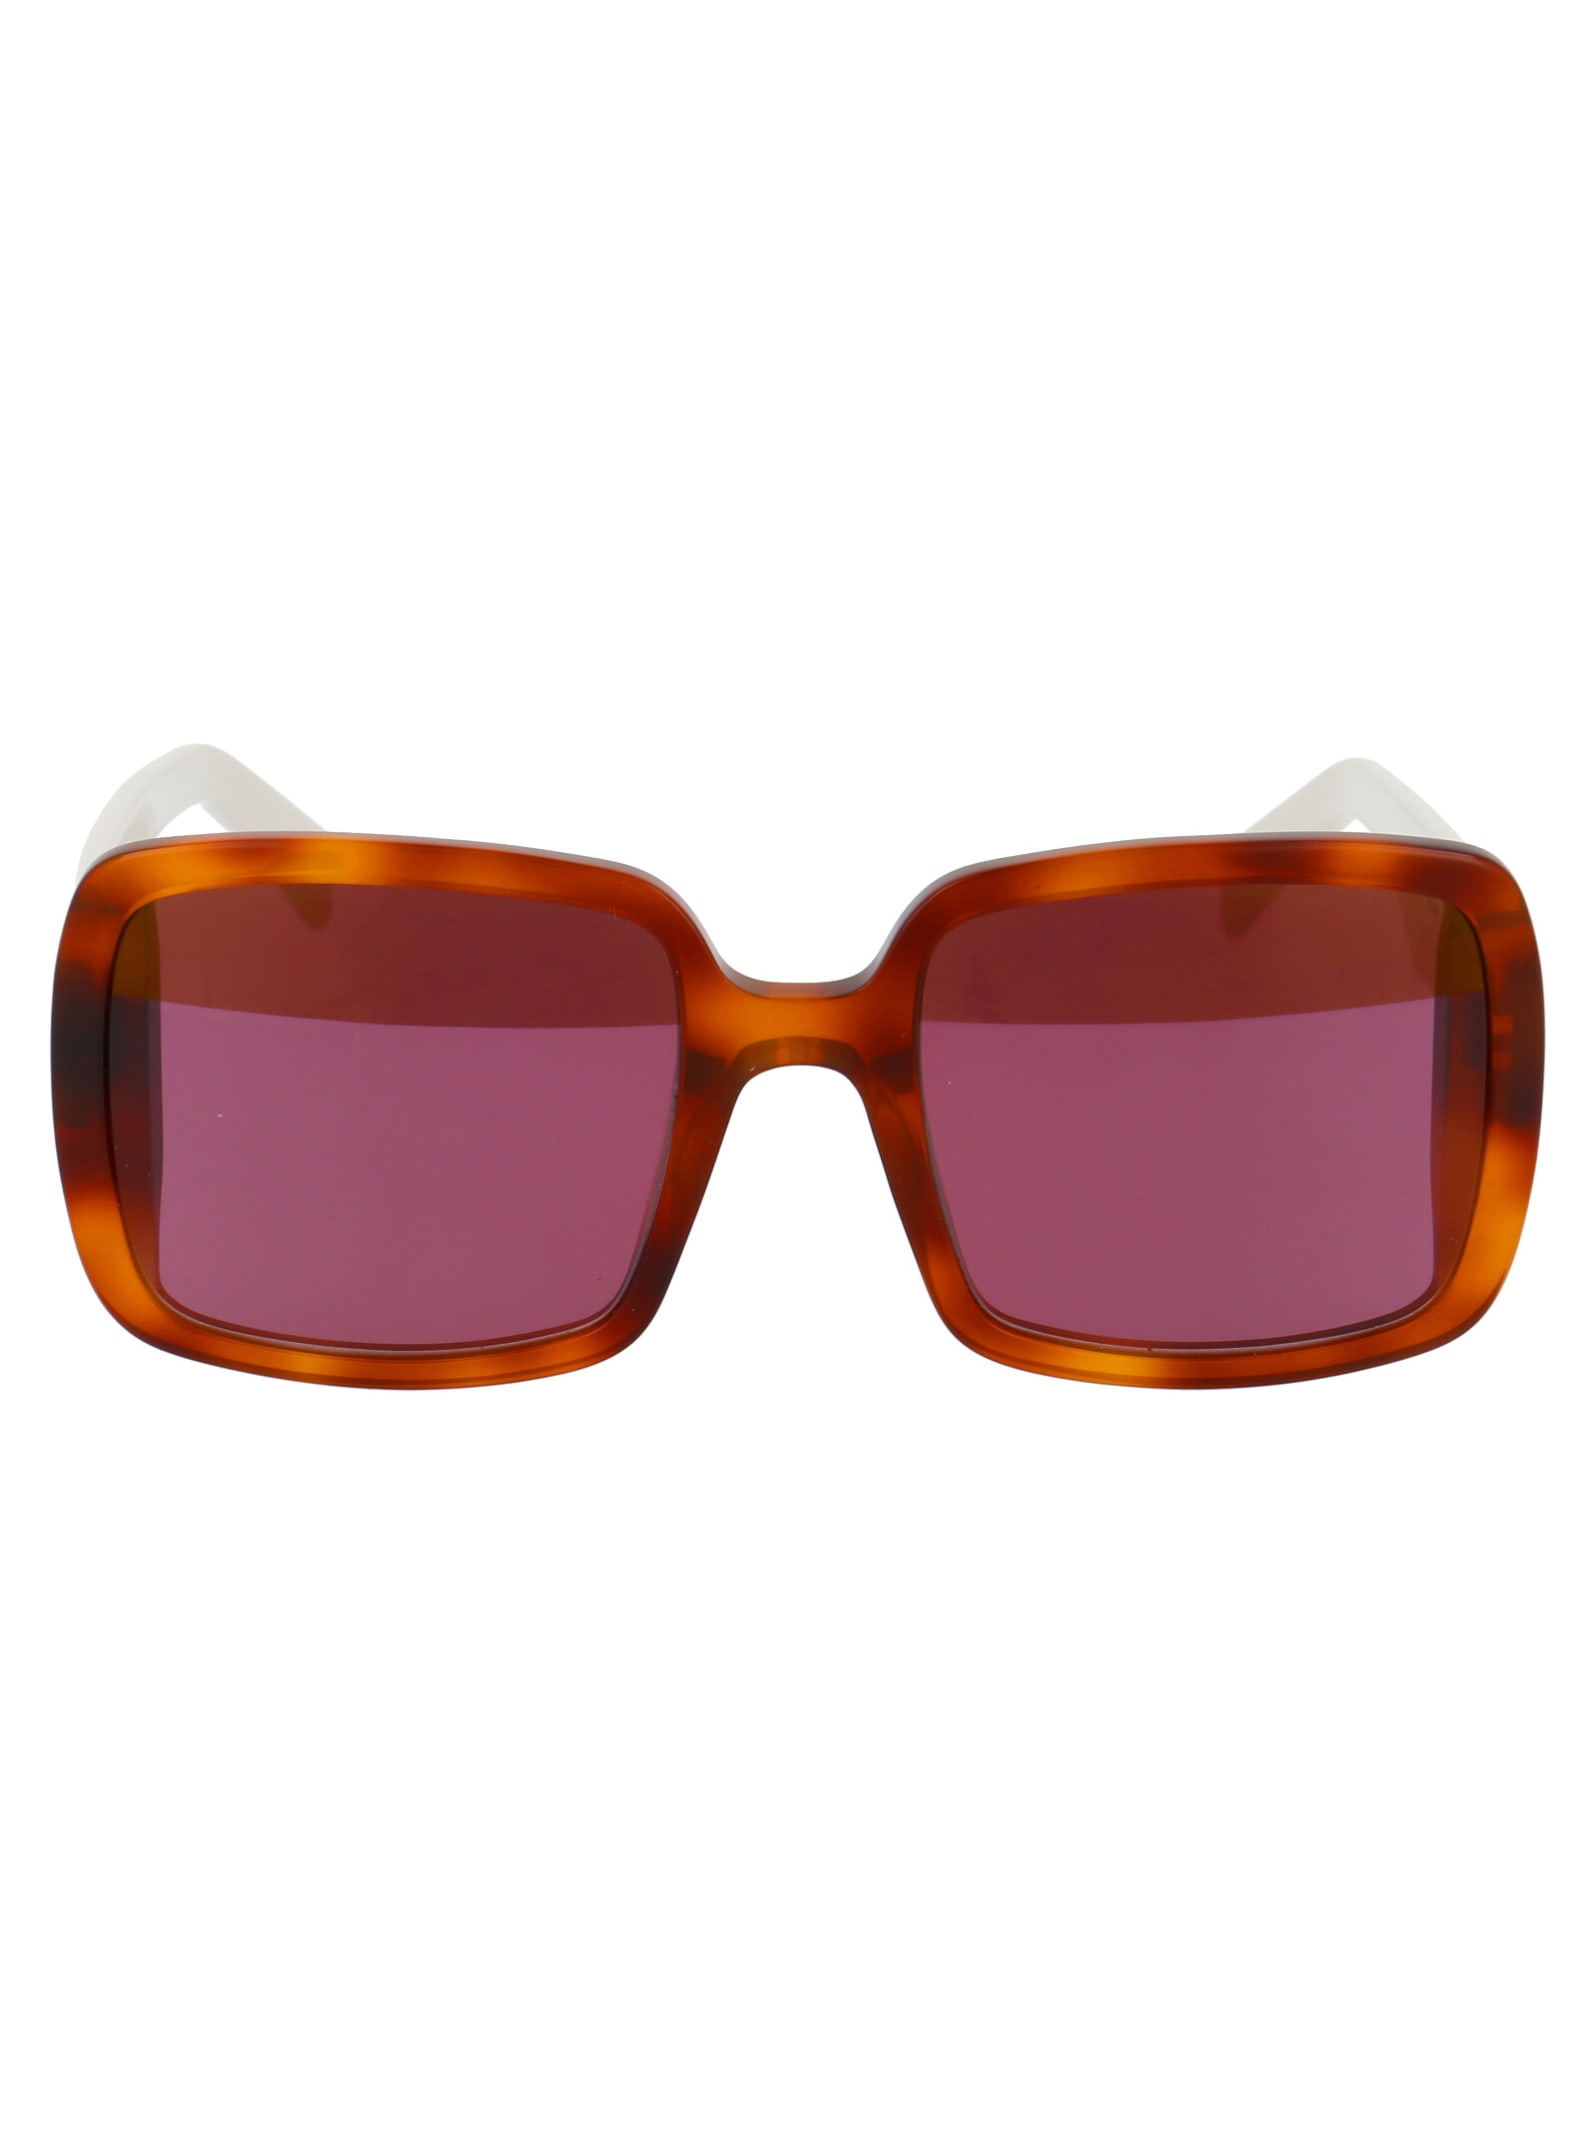 Marni Eyewear Me633s Sunglasses